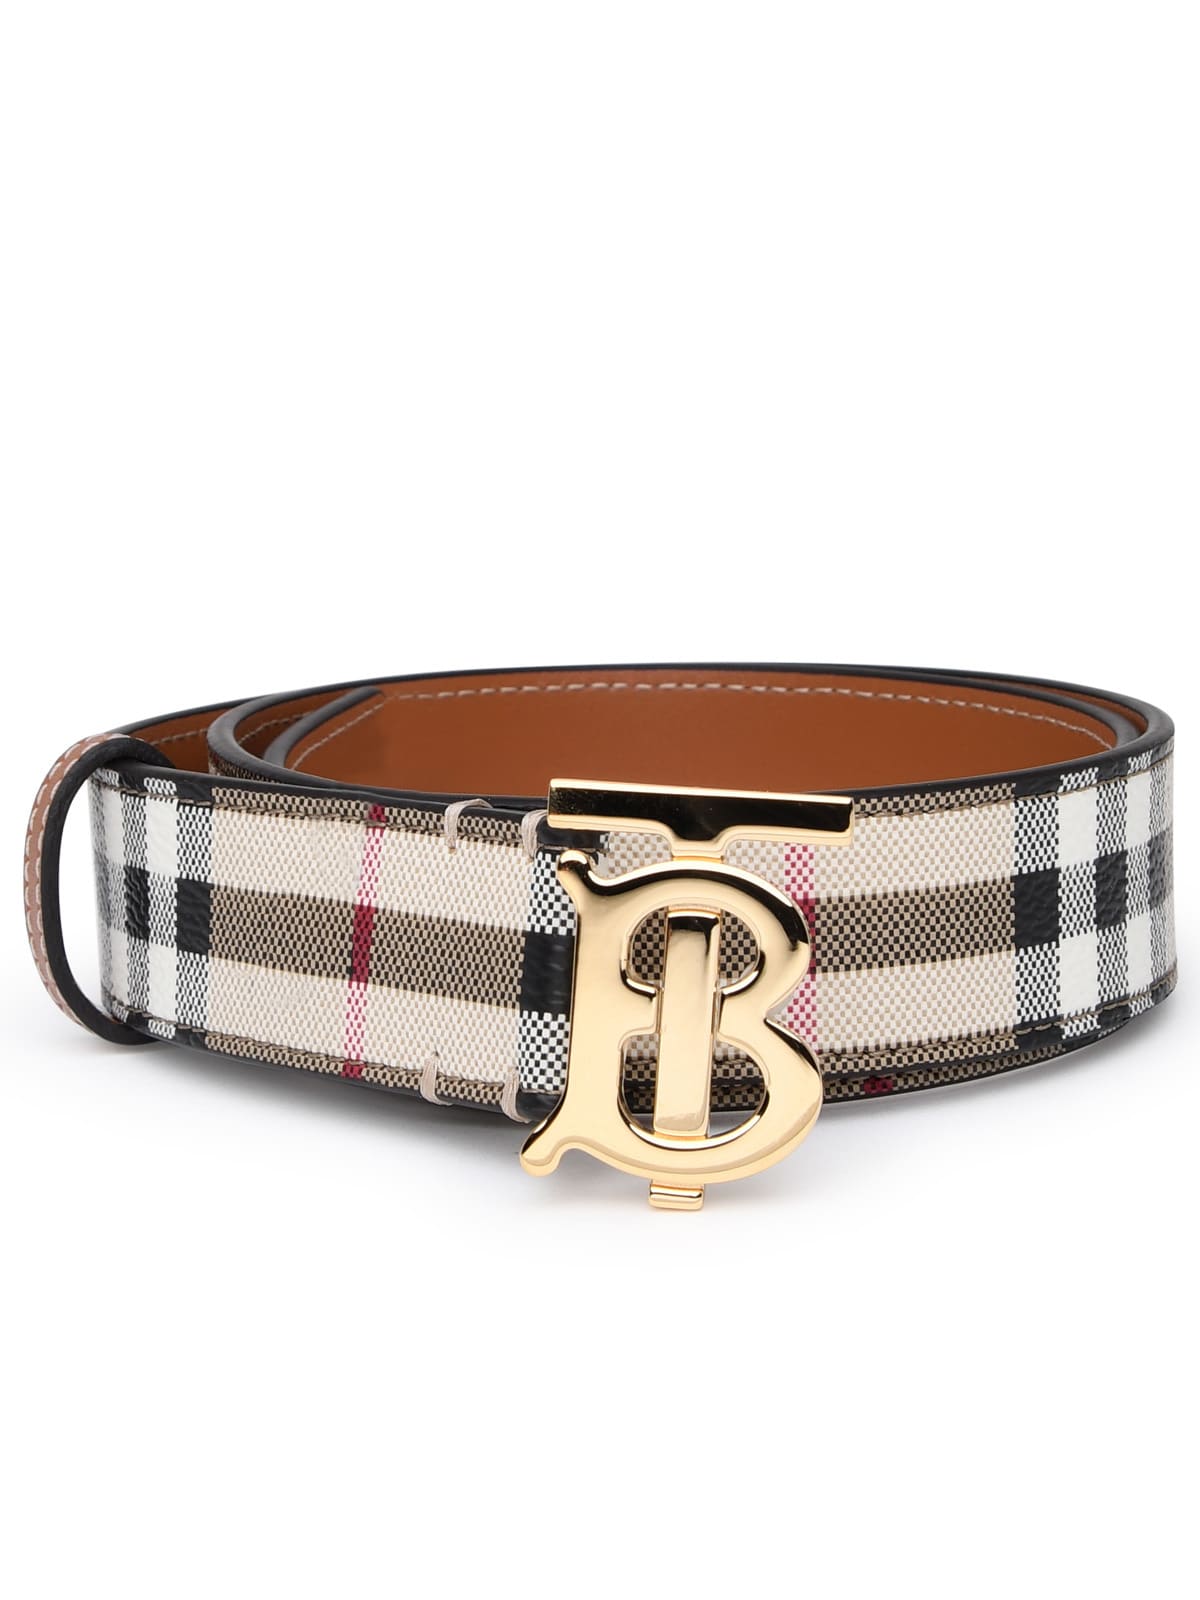 Burberry Tb Belt In Beige Leather Blend